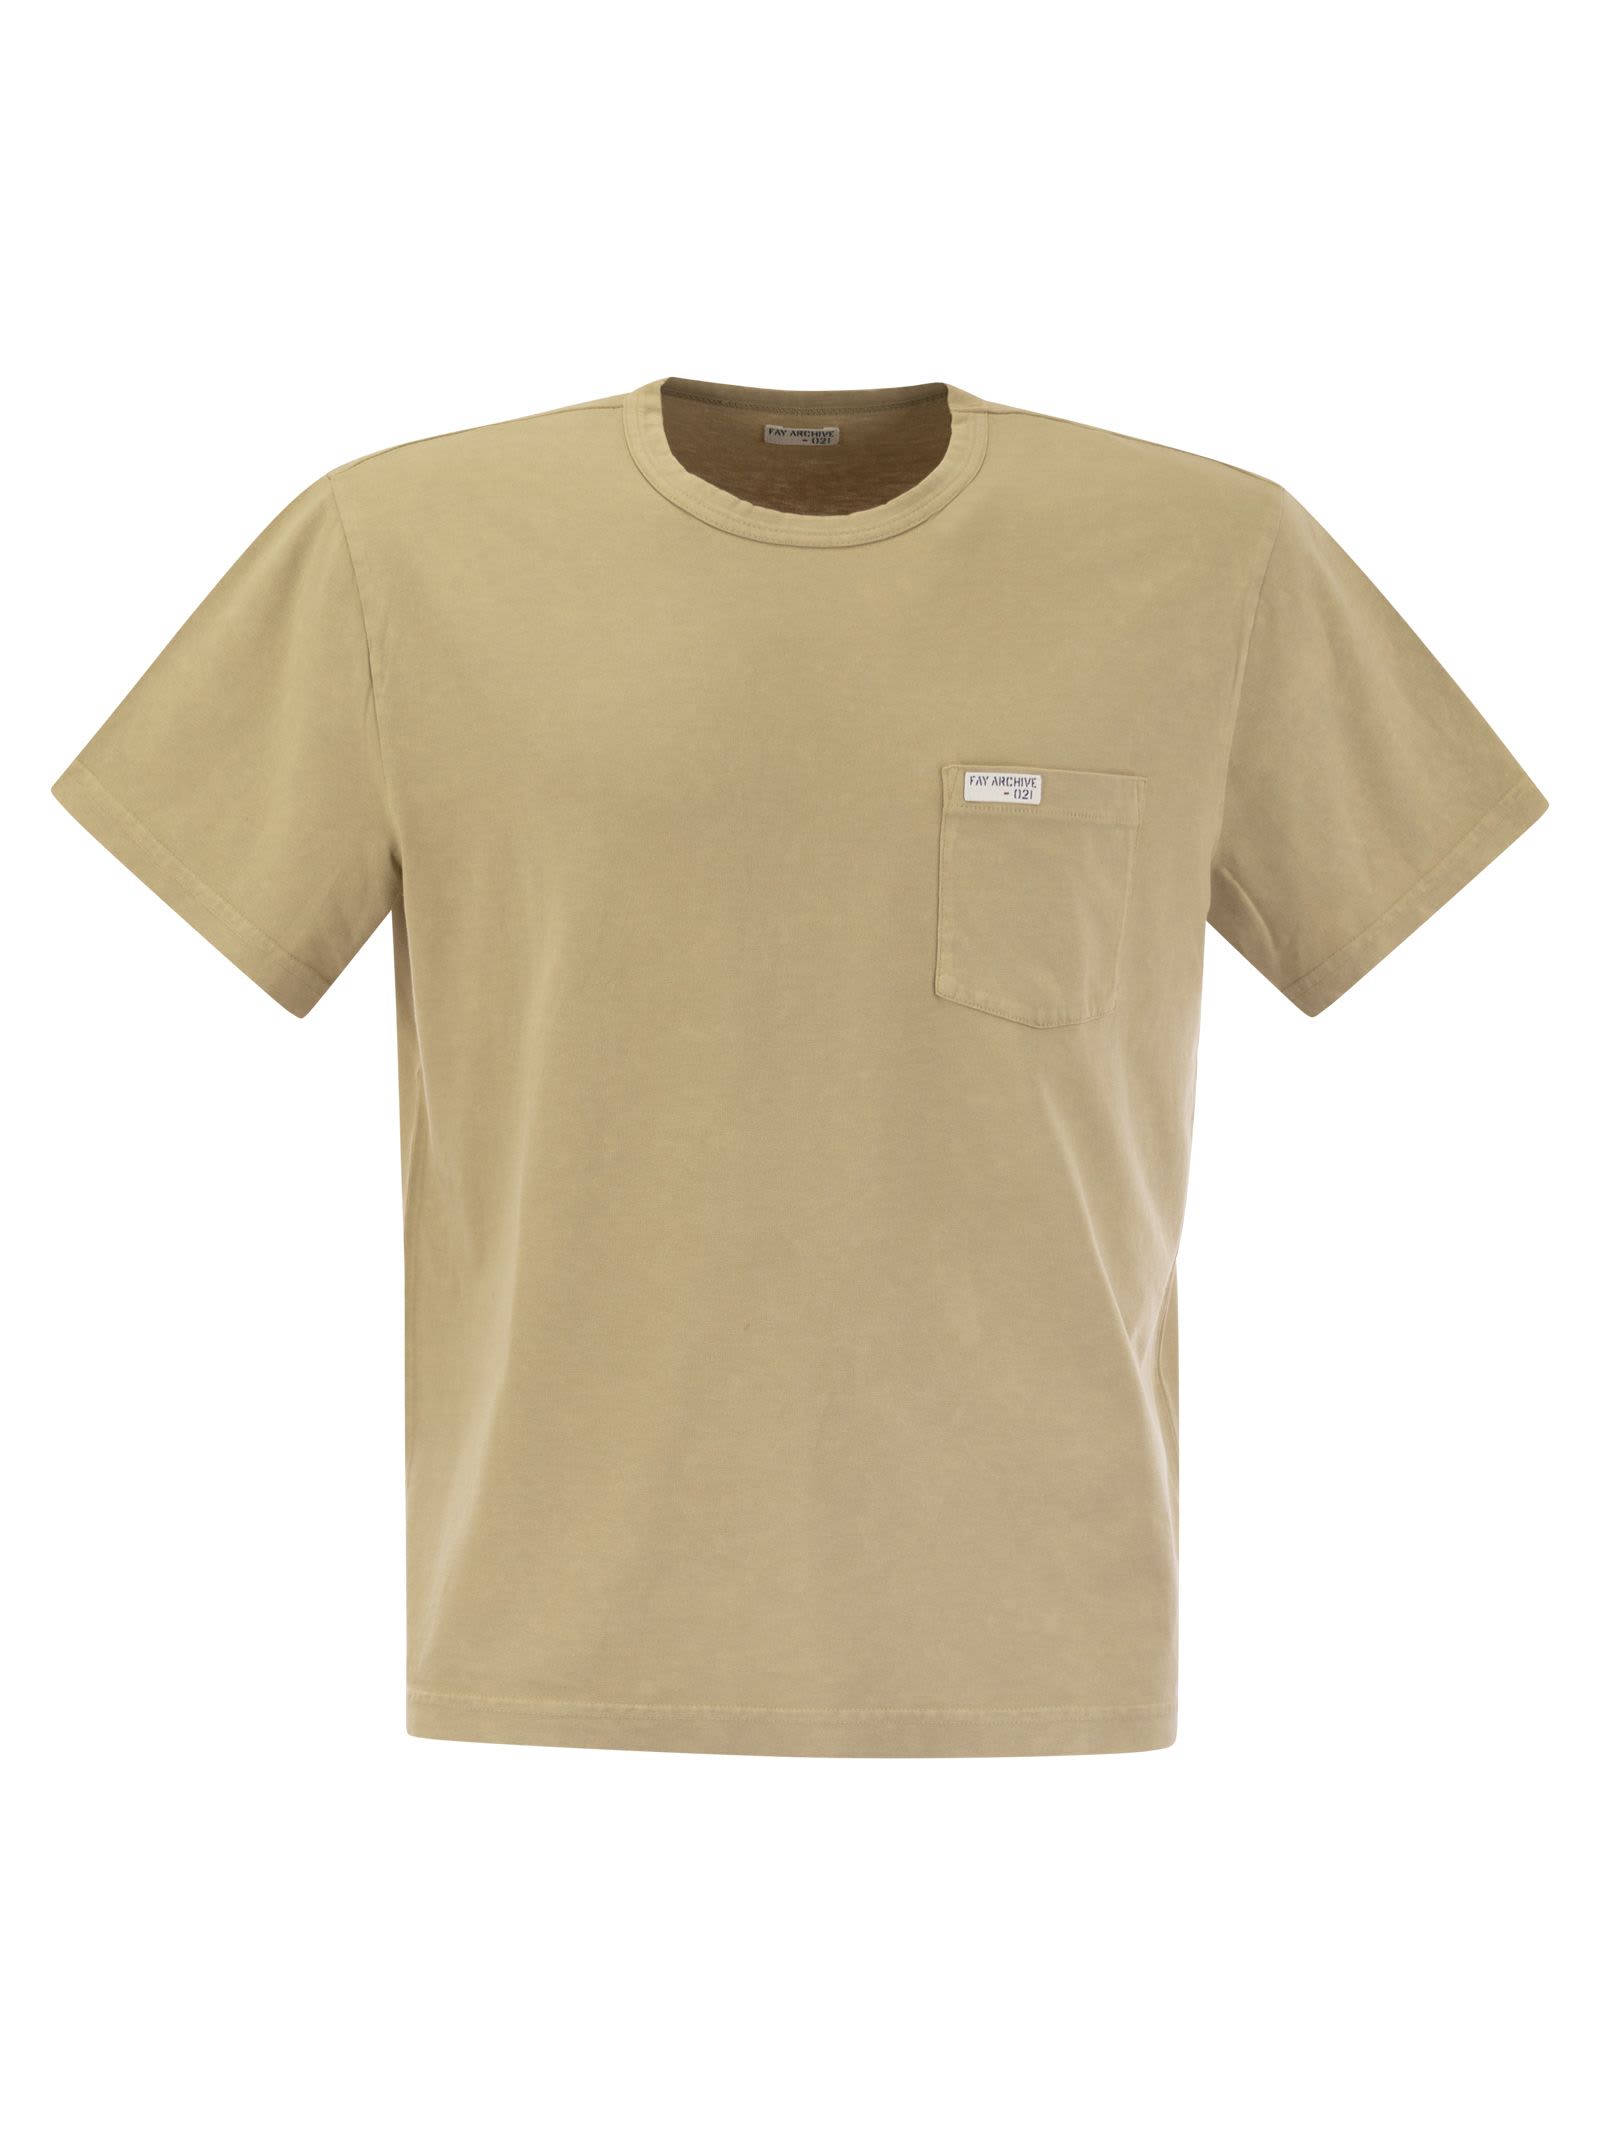 Brown T-shirt